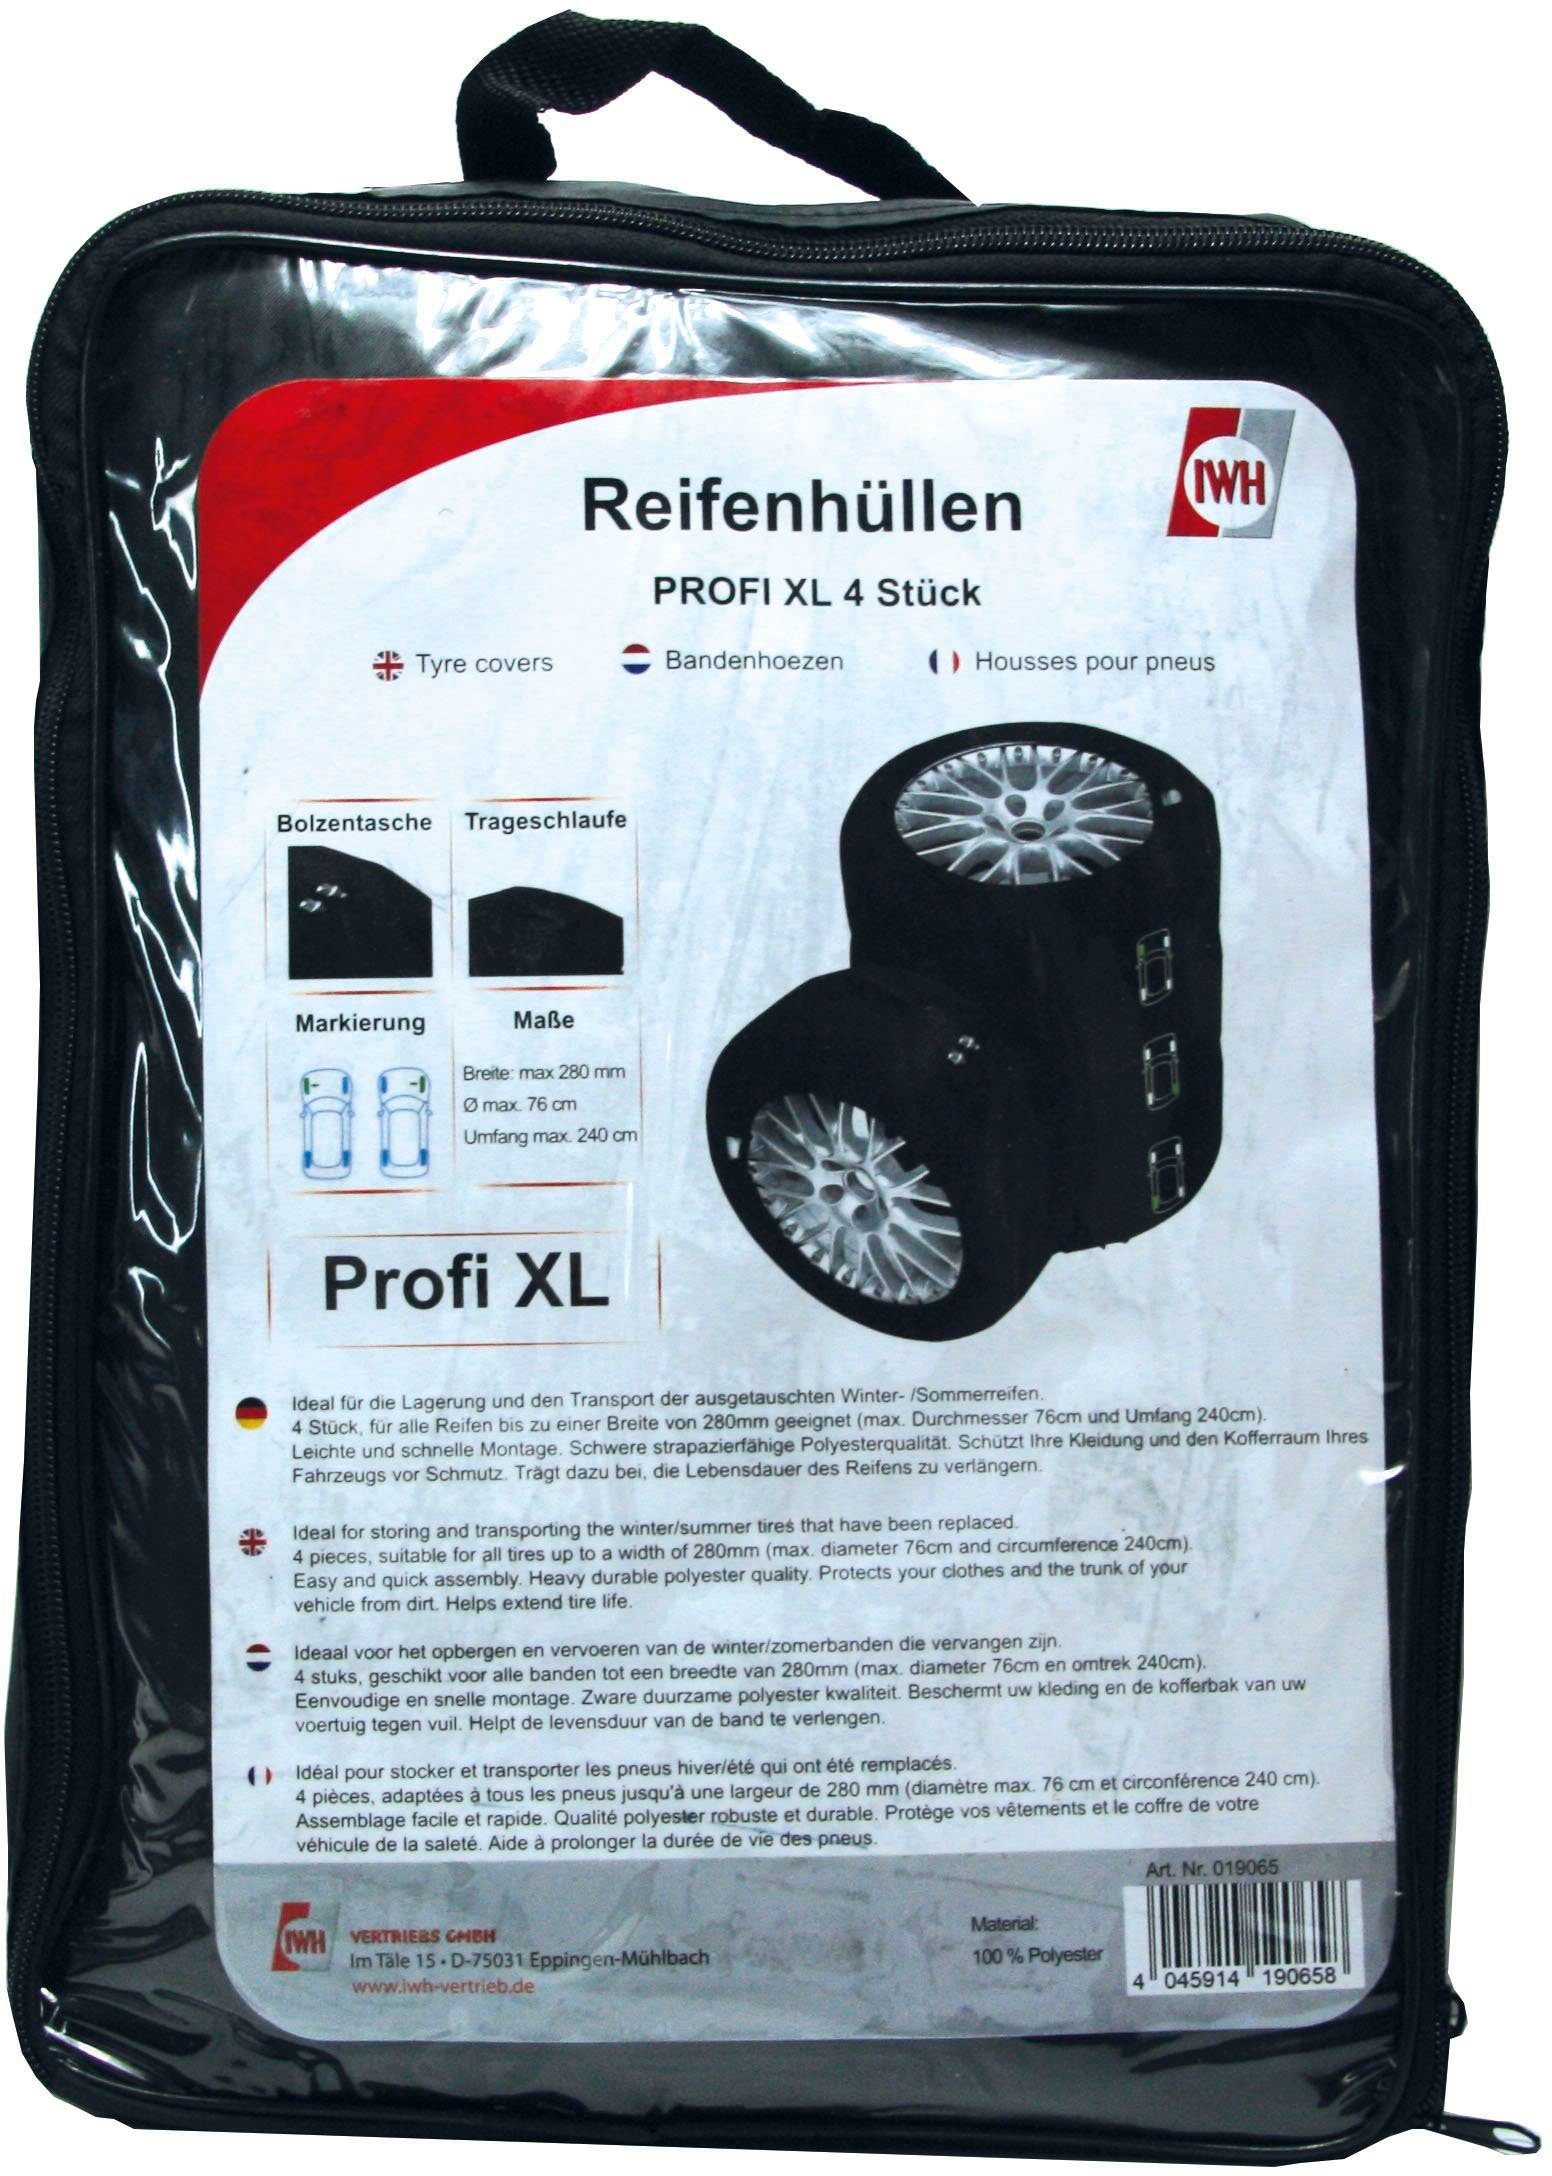 IWH Reifentasche Reifenhüllen Profi XL (Set), 4 Stk.